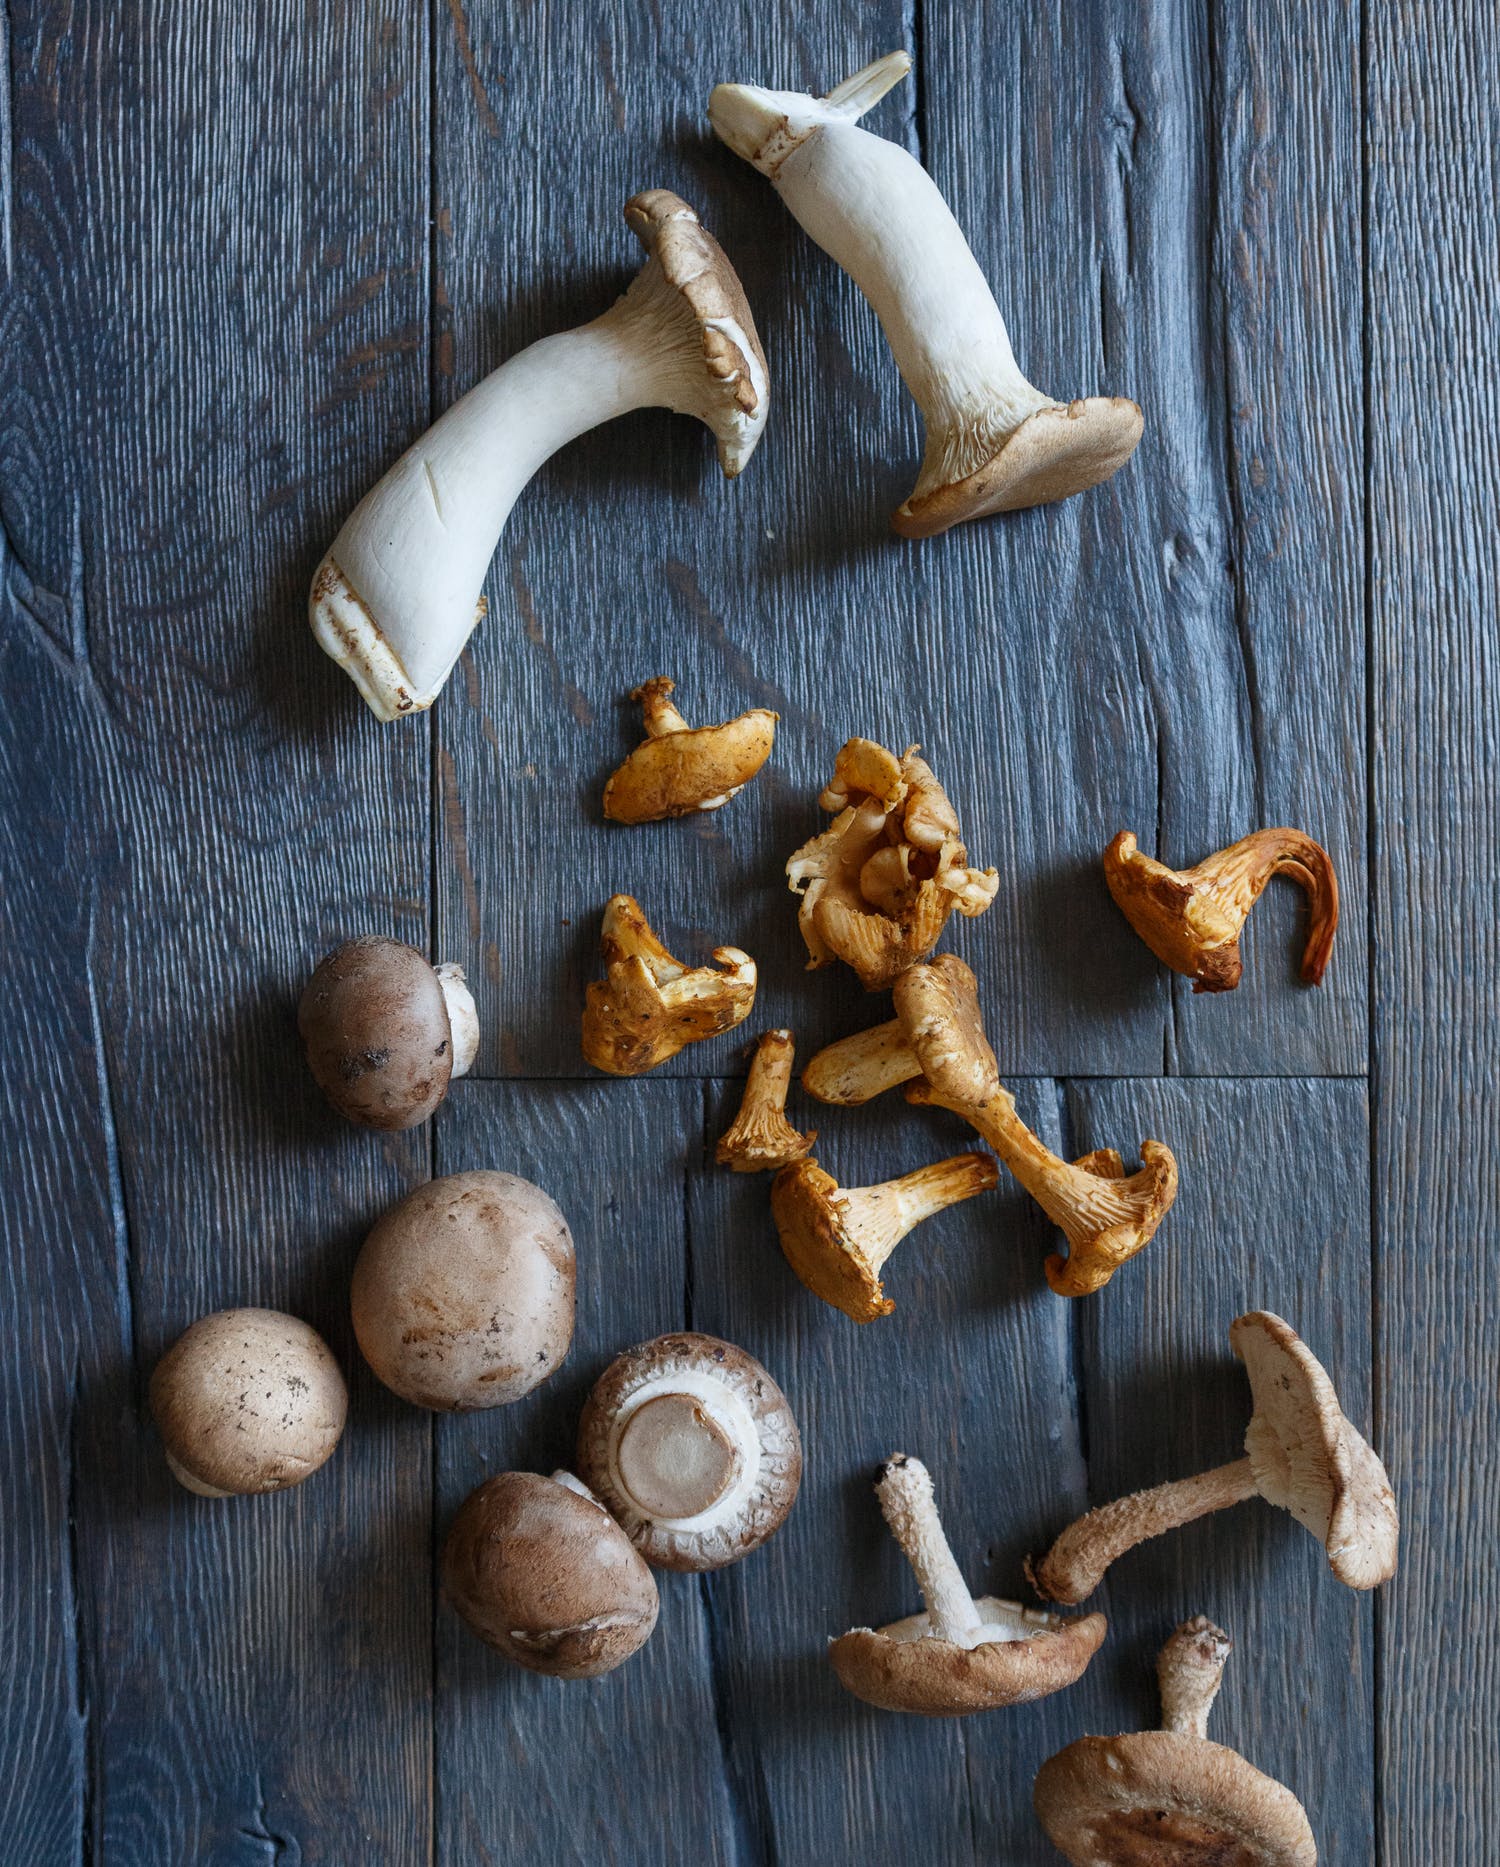 Best Sauteed Wild Mushrooms Recipe - The Yellow Table